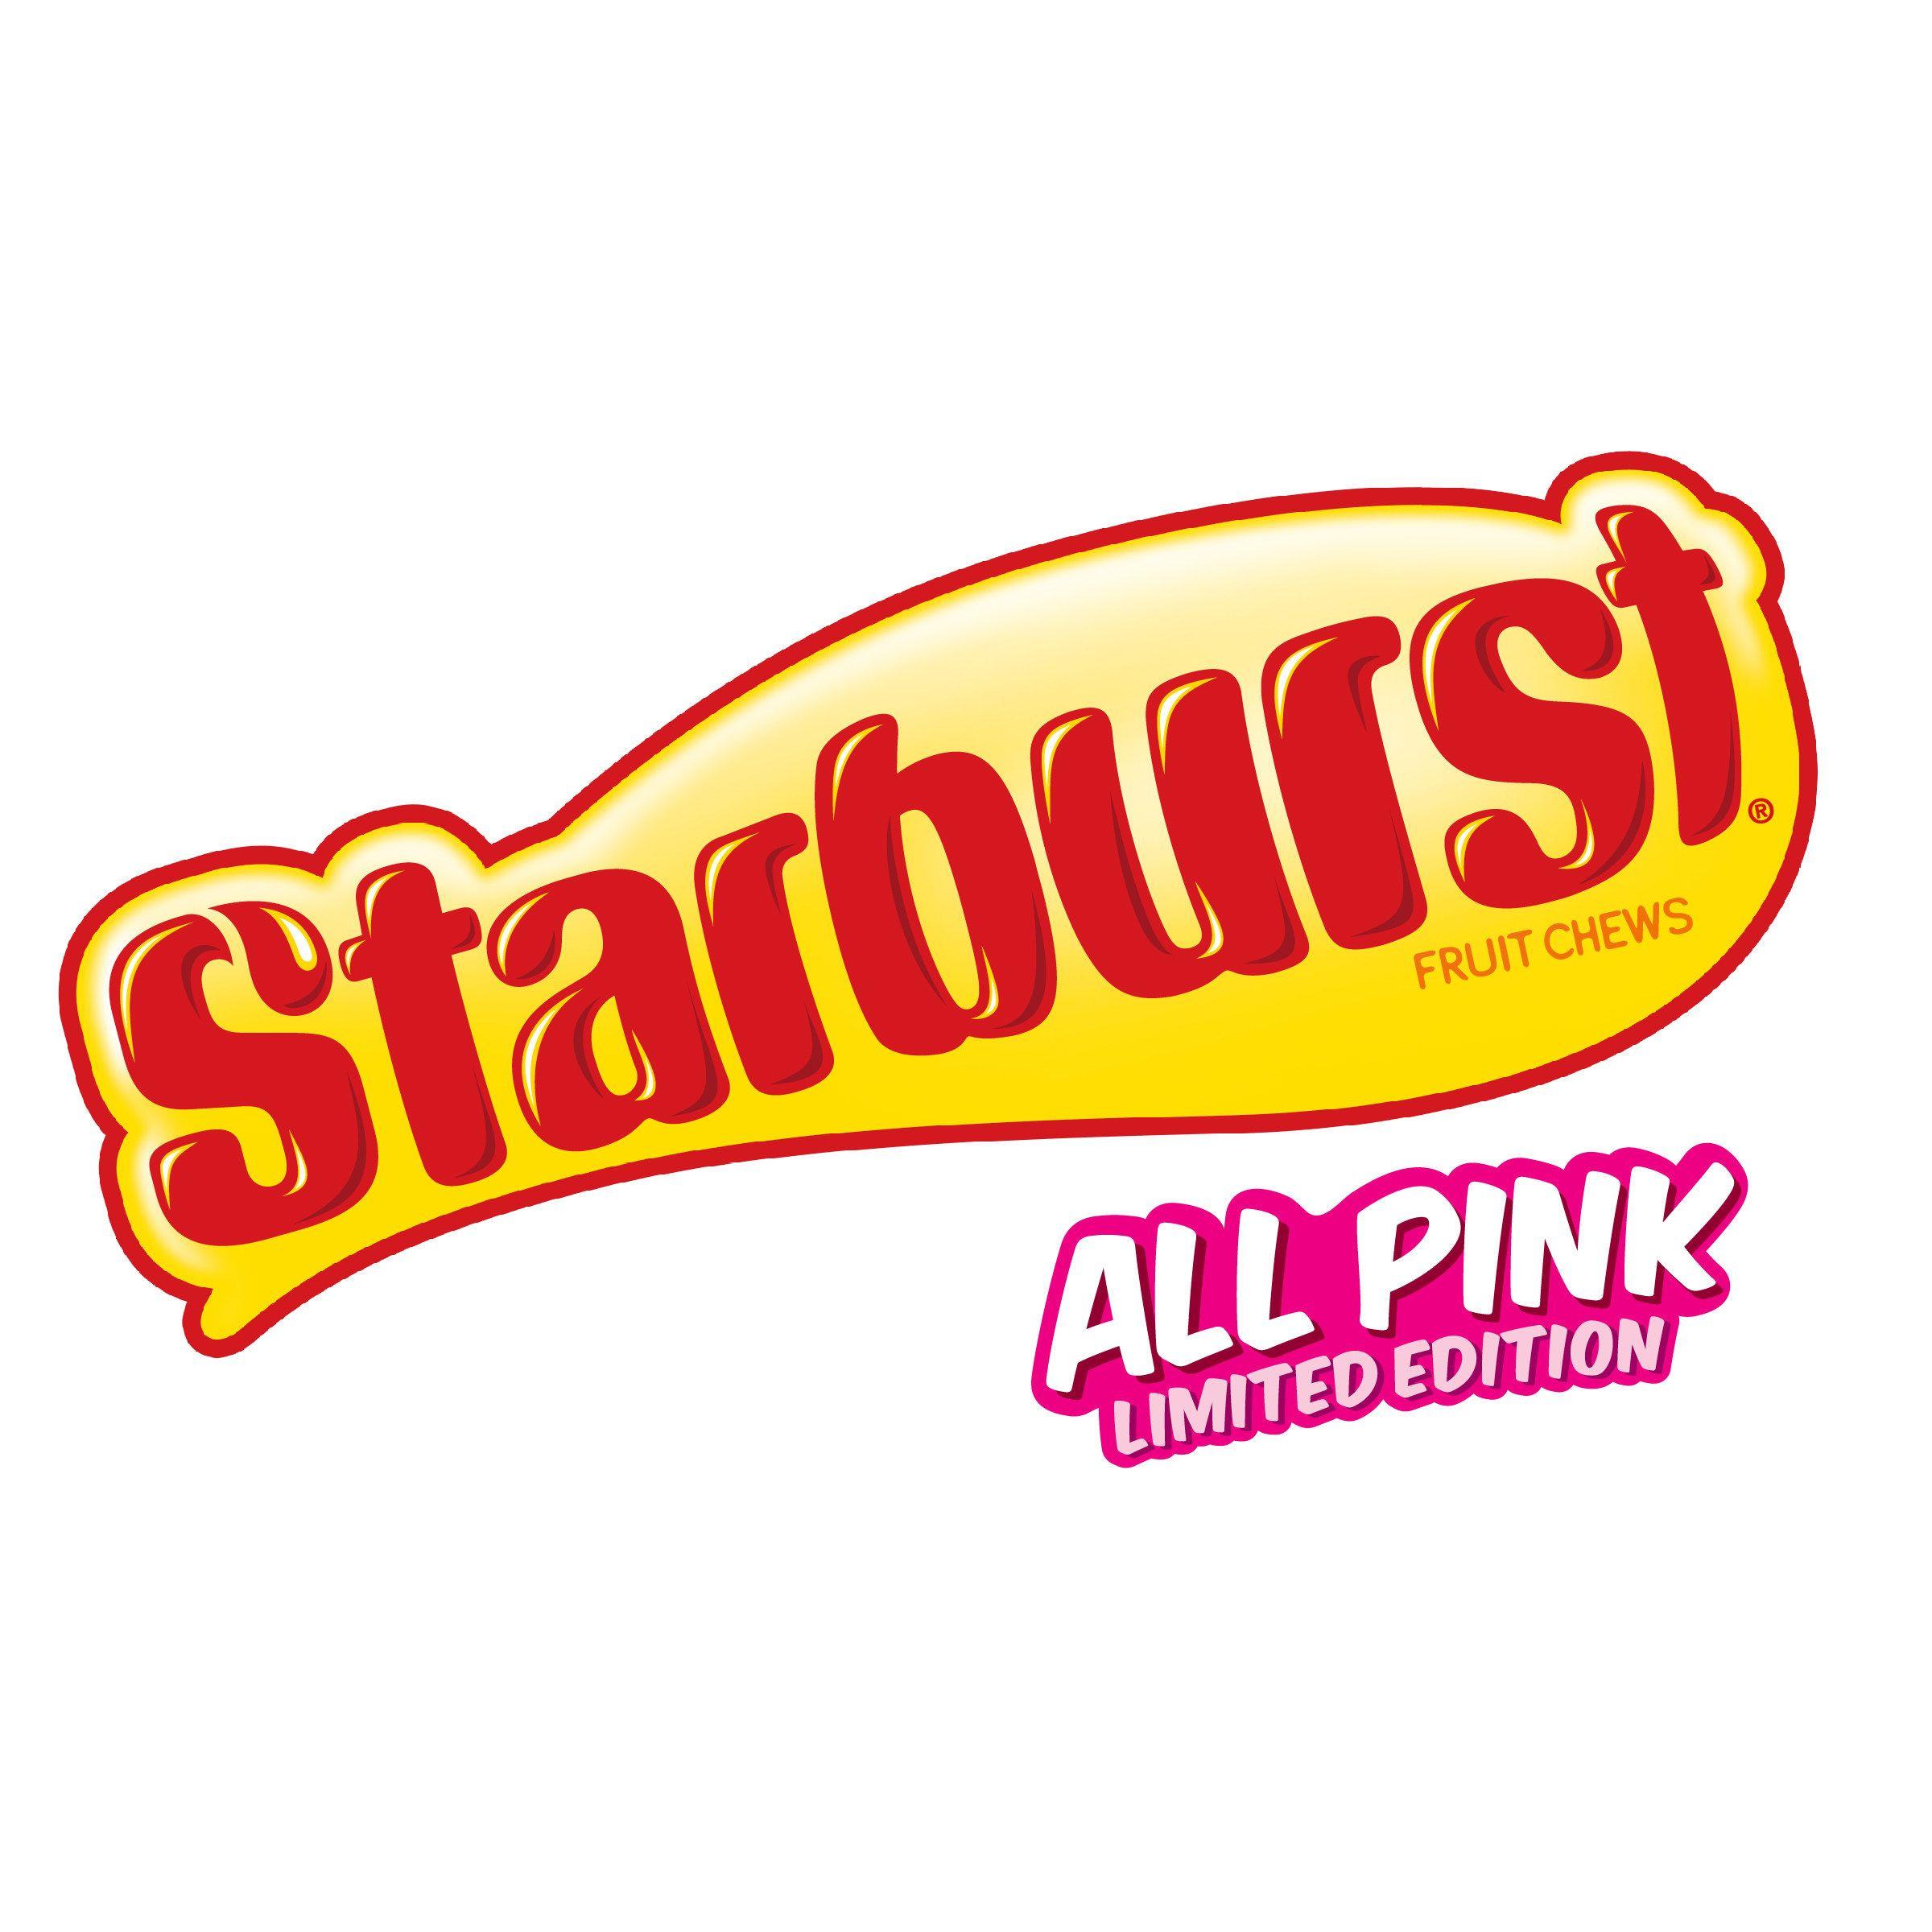 Starburst Logo - STARBURST Celebrates Return Of Limited Edition All Pink With New